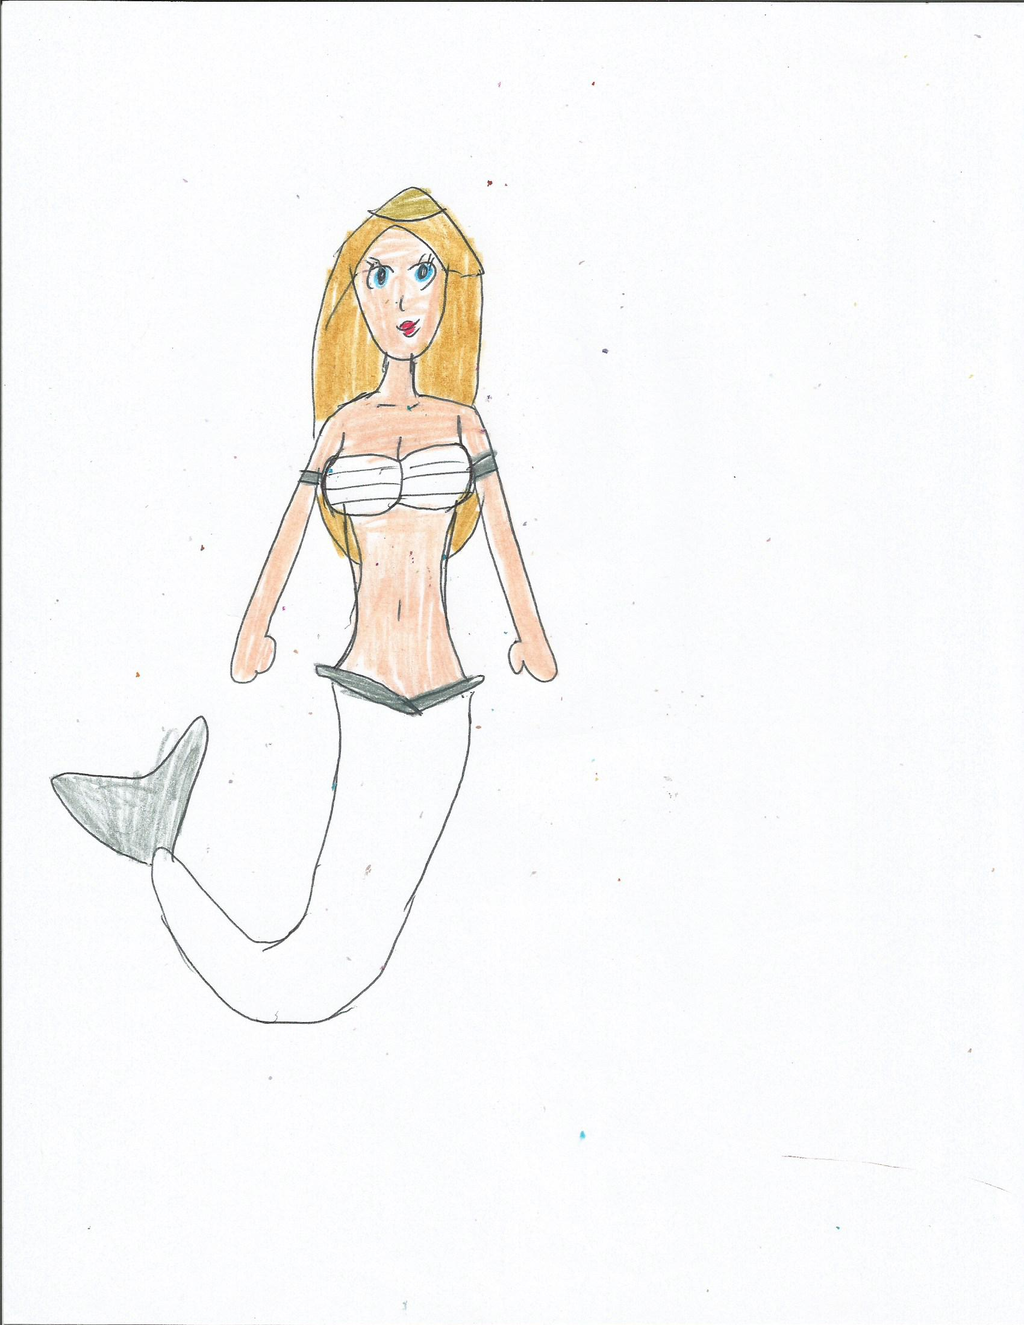 Most recent image: Anime Mermaid Girls Cora (1)